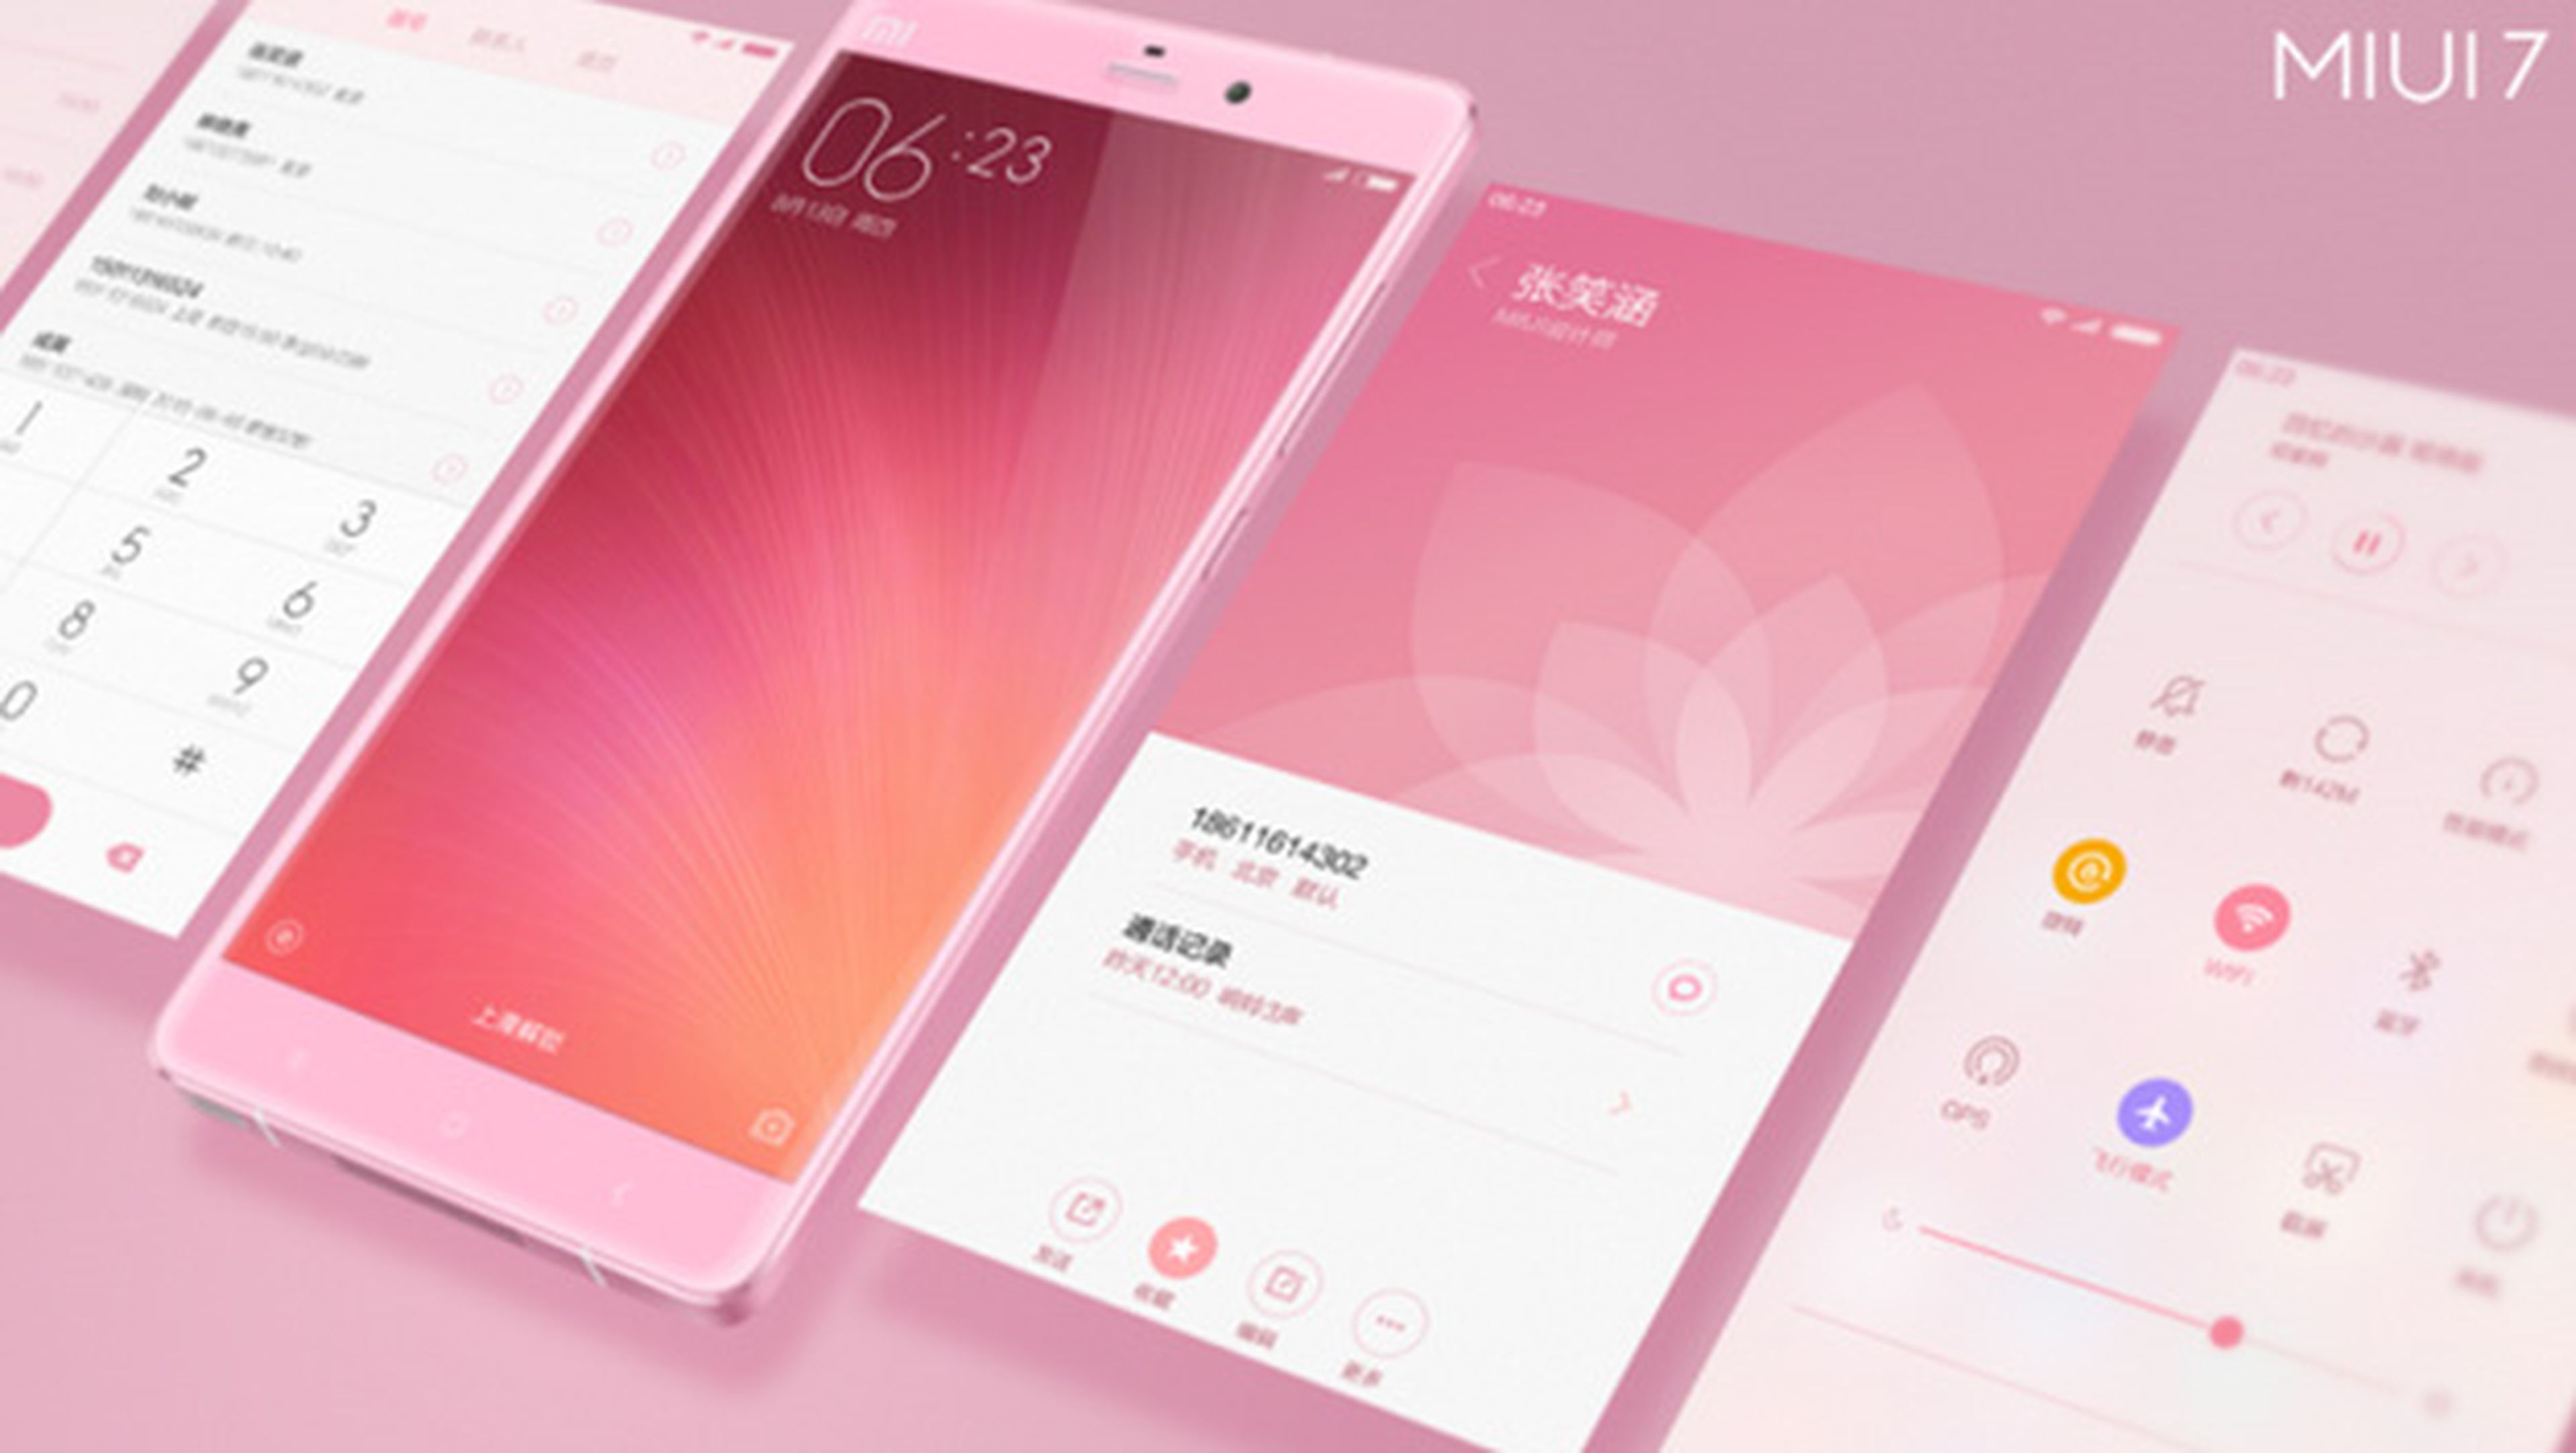 Xiaomi MIUI 7 Mi Wi-Fi nano presentados oficialmente